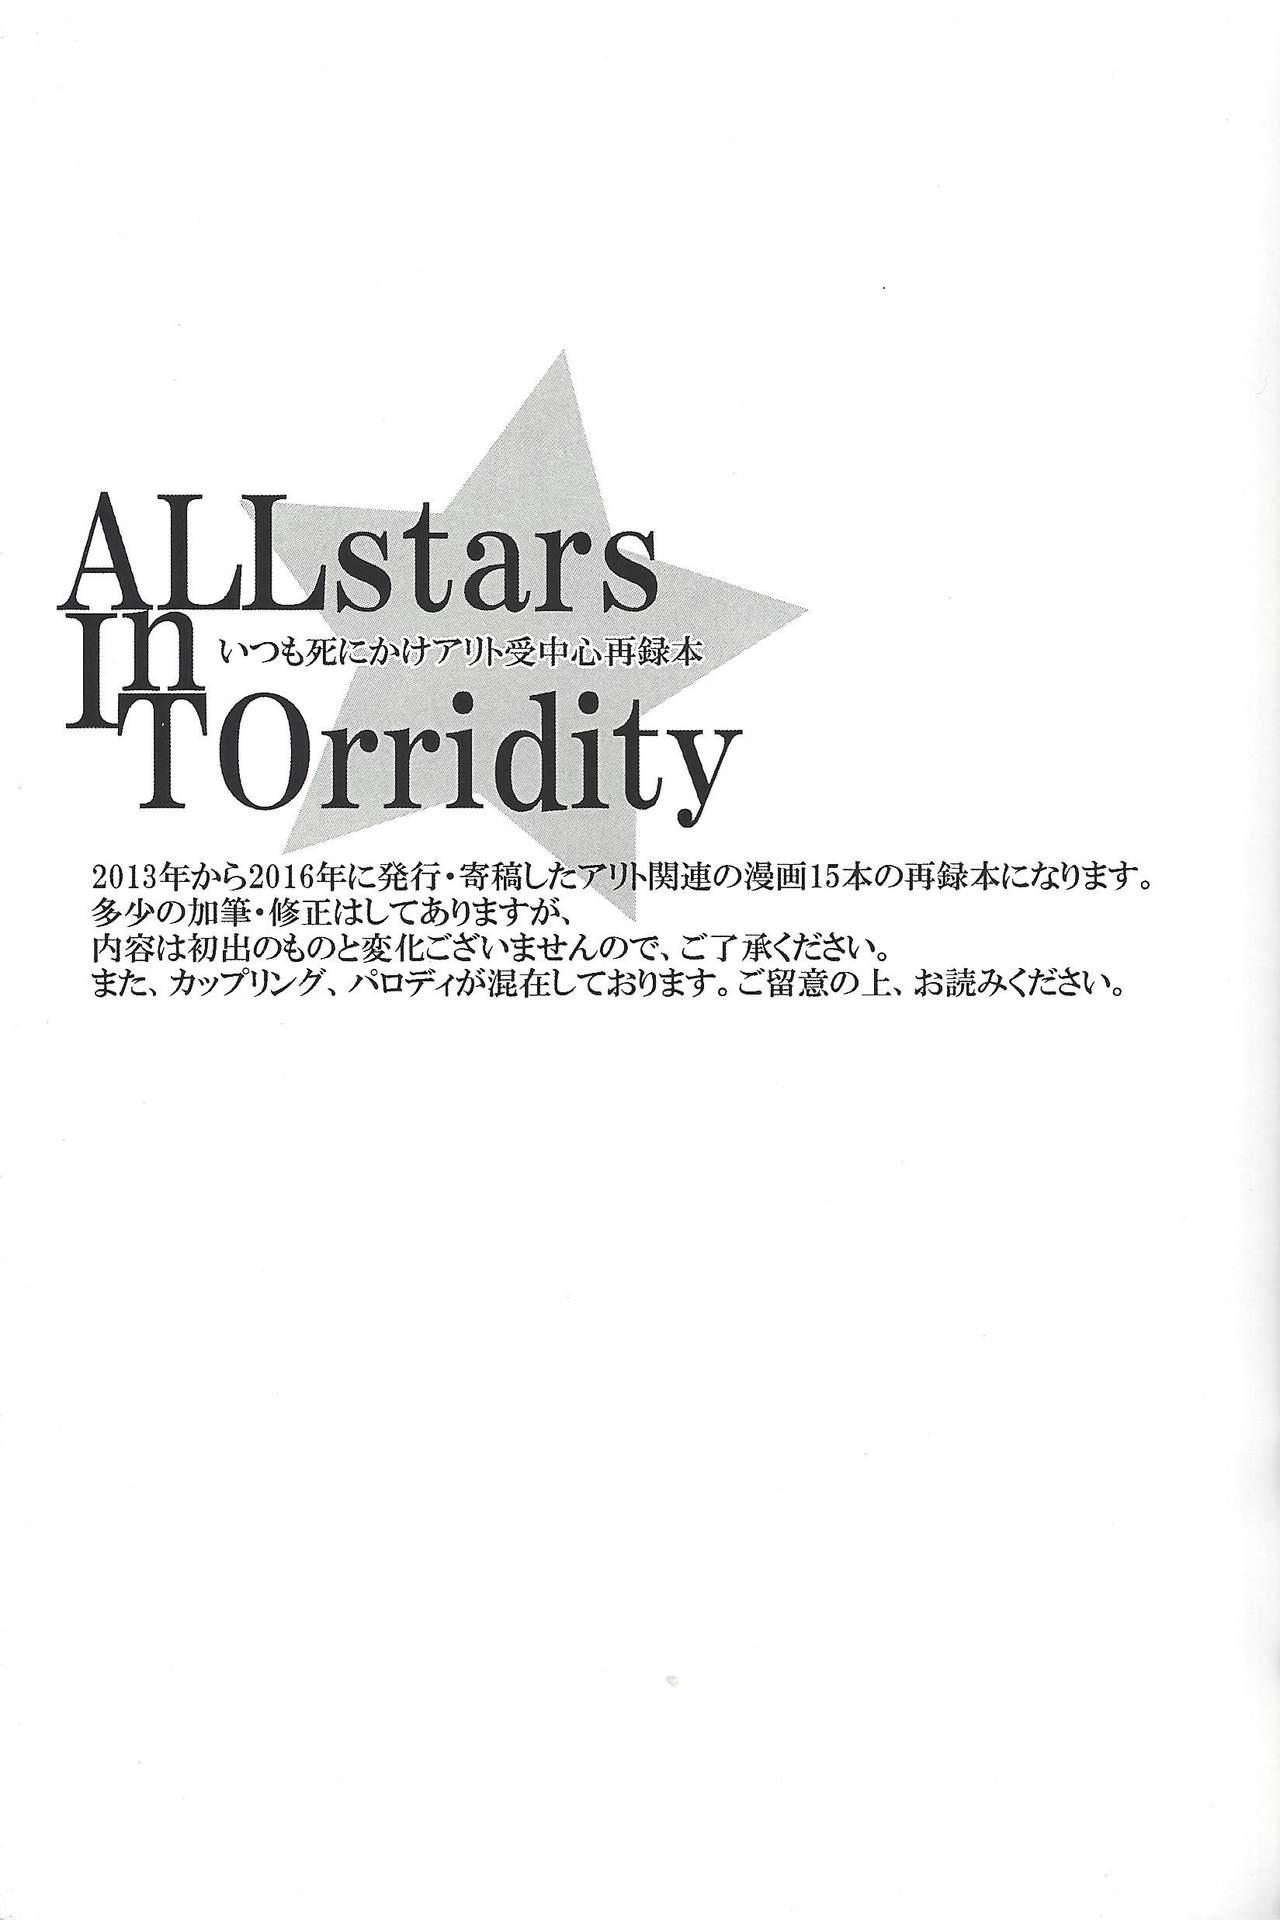 ALL stars In TOrridiy 4